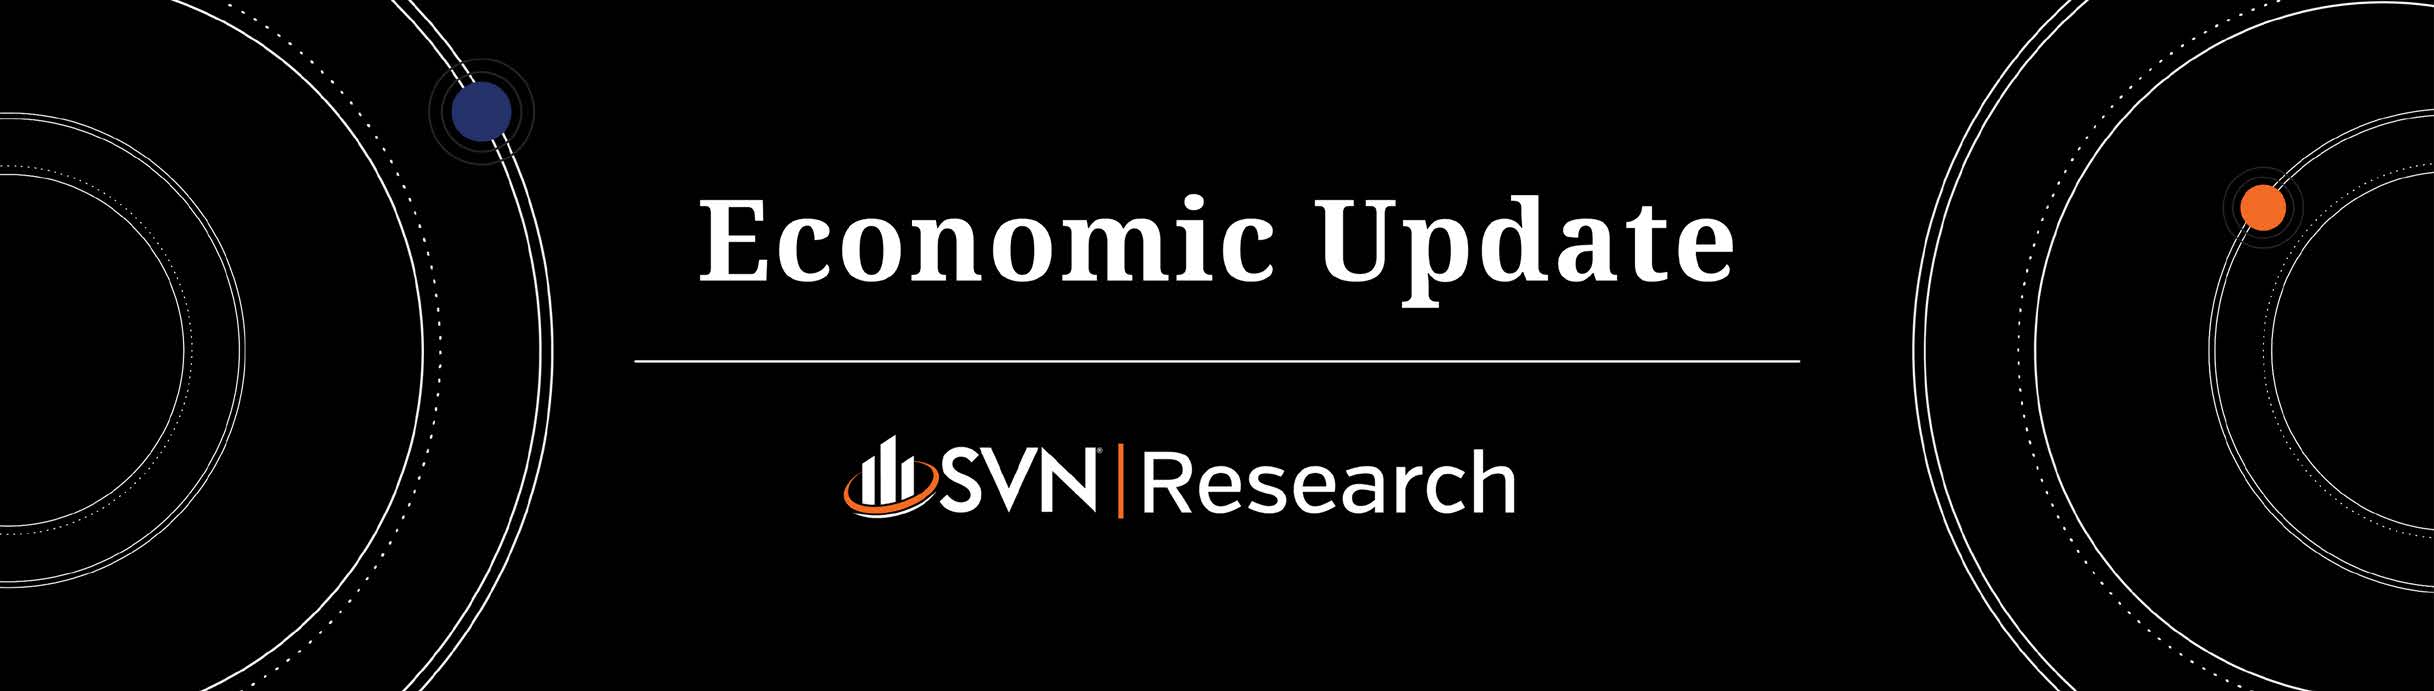 SVN | Research Economic Update 3.18.2022